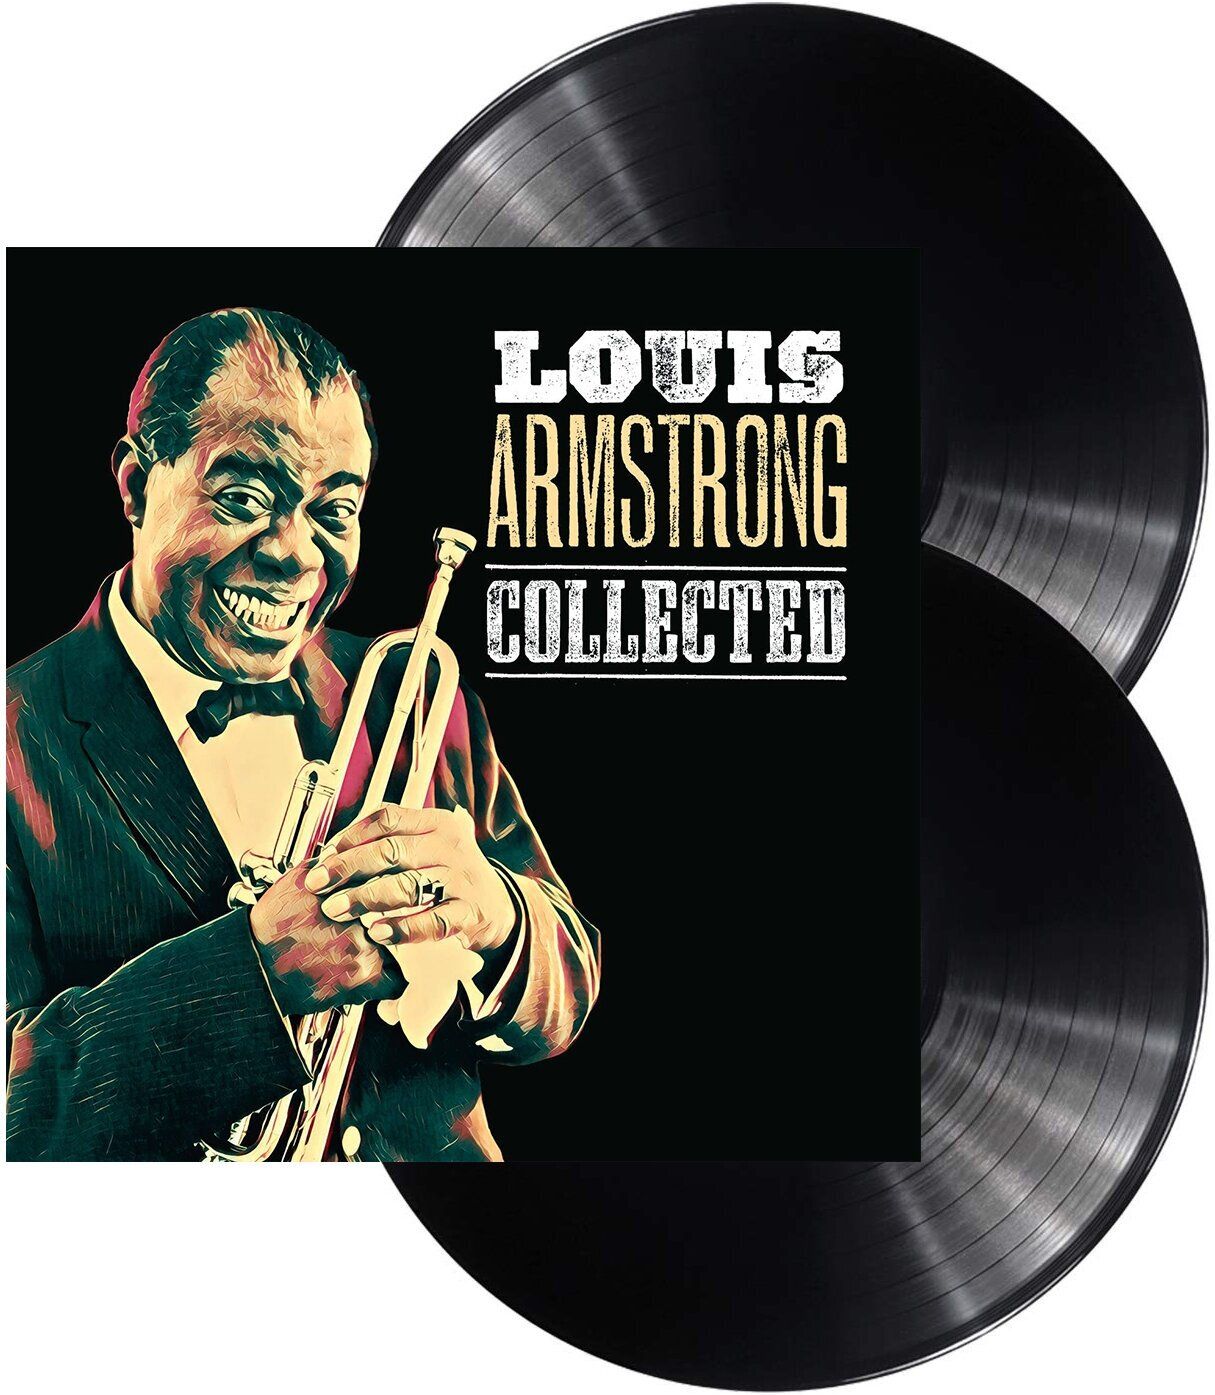 Виниловая пластинка Armstrong, Louis, Collected (0600753814345) цена и фото